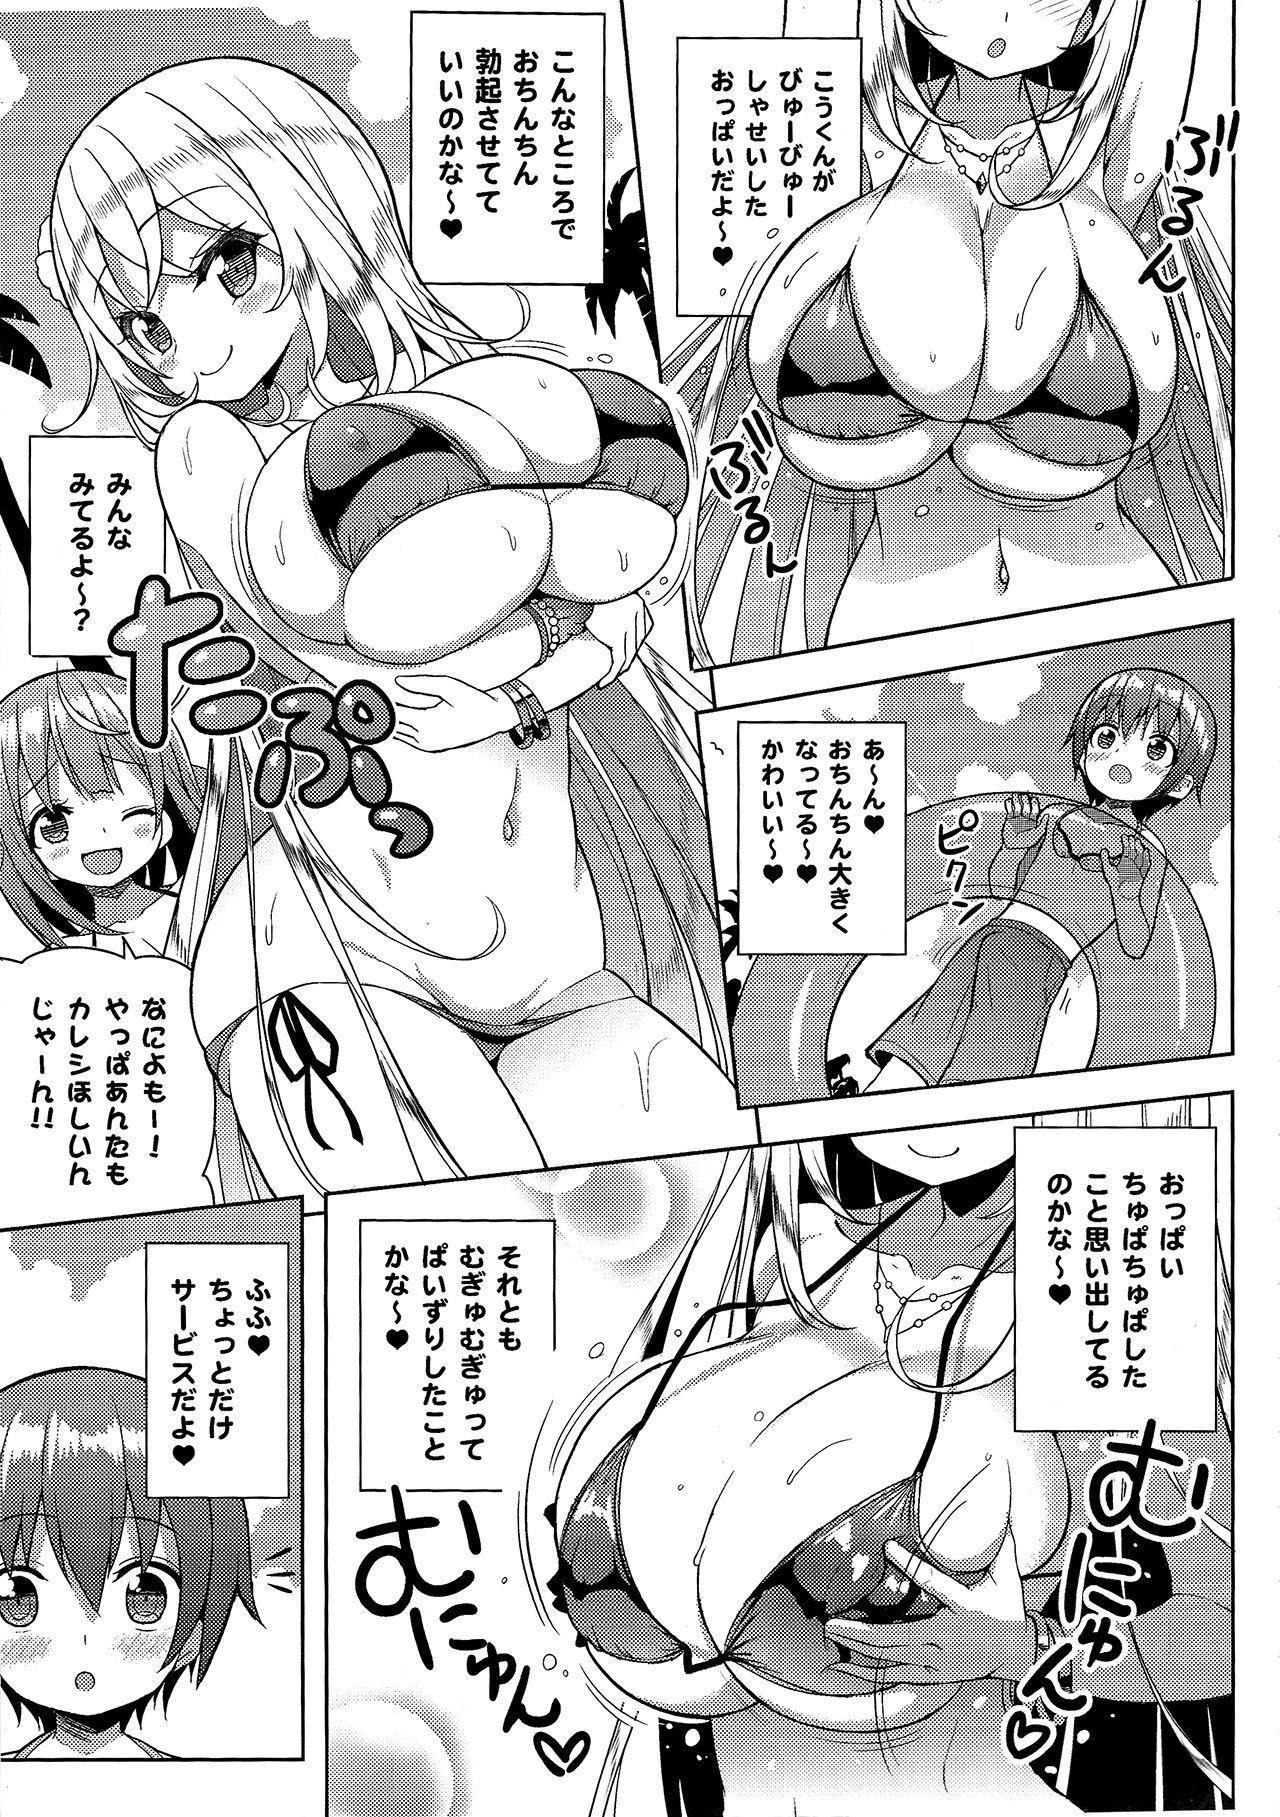 Cheating Ikenai Bikini no Onee-san 2 - Original Spit - Page 6